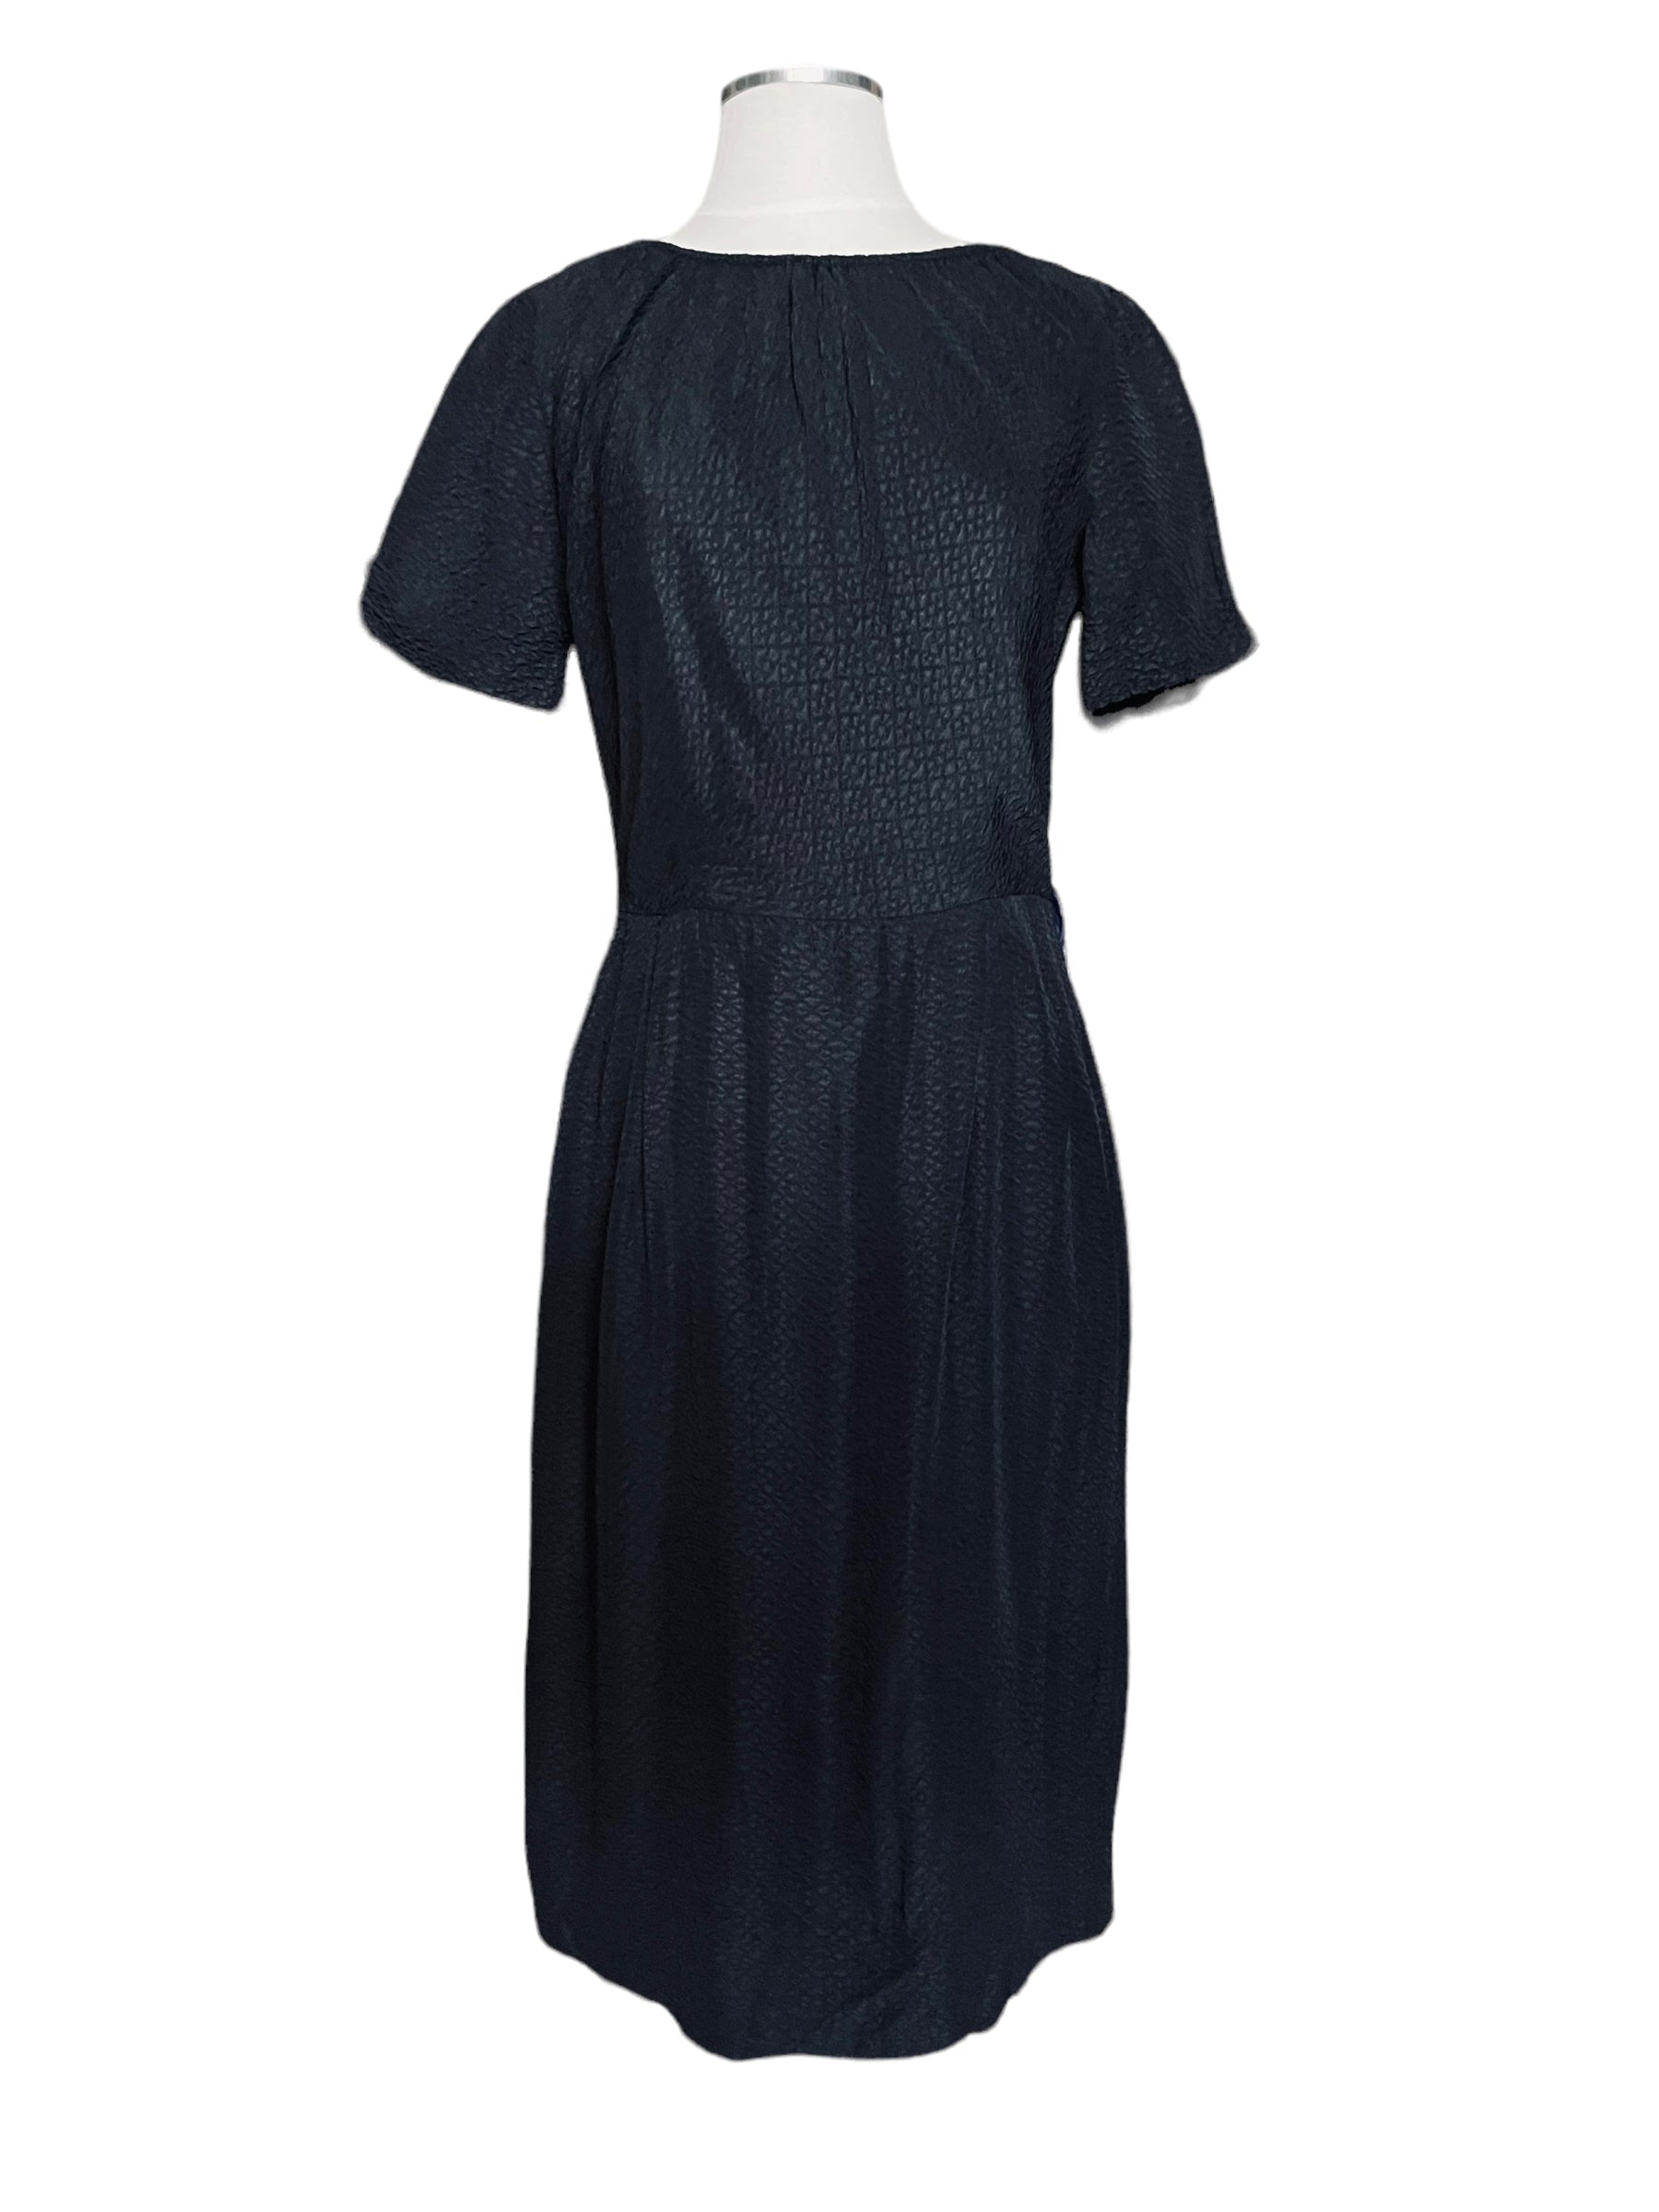 Full front view of Vintage 1950s Black Textured Dress by Parkshire |  Barn Owl Vintage | Seattle Vintage Dresses